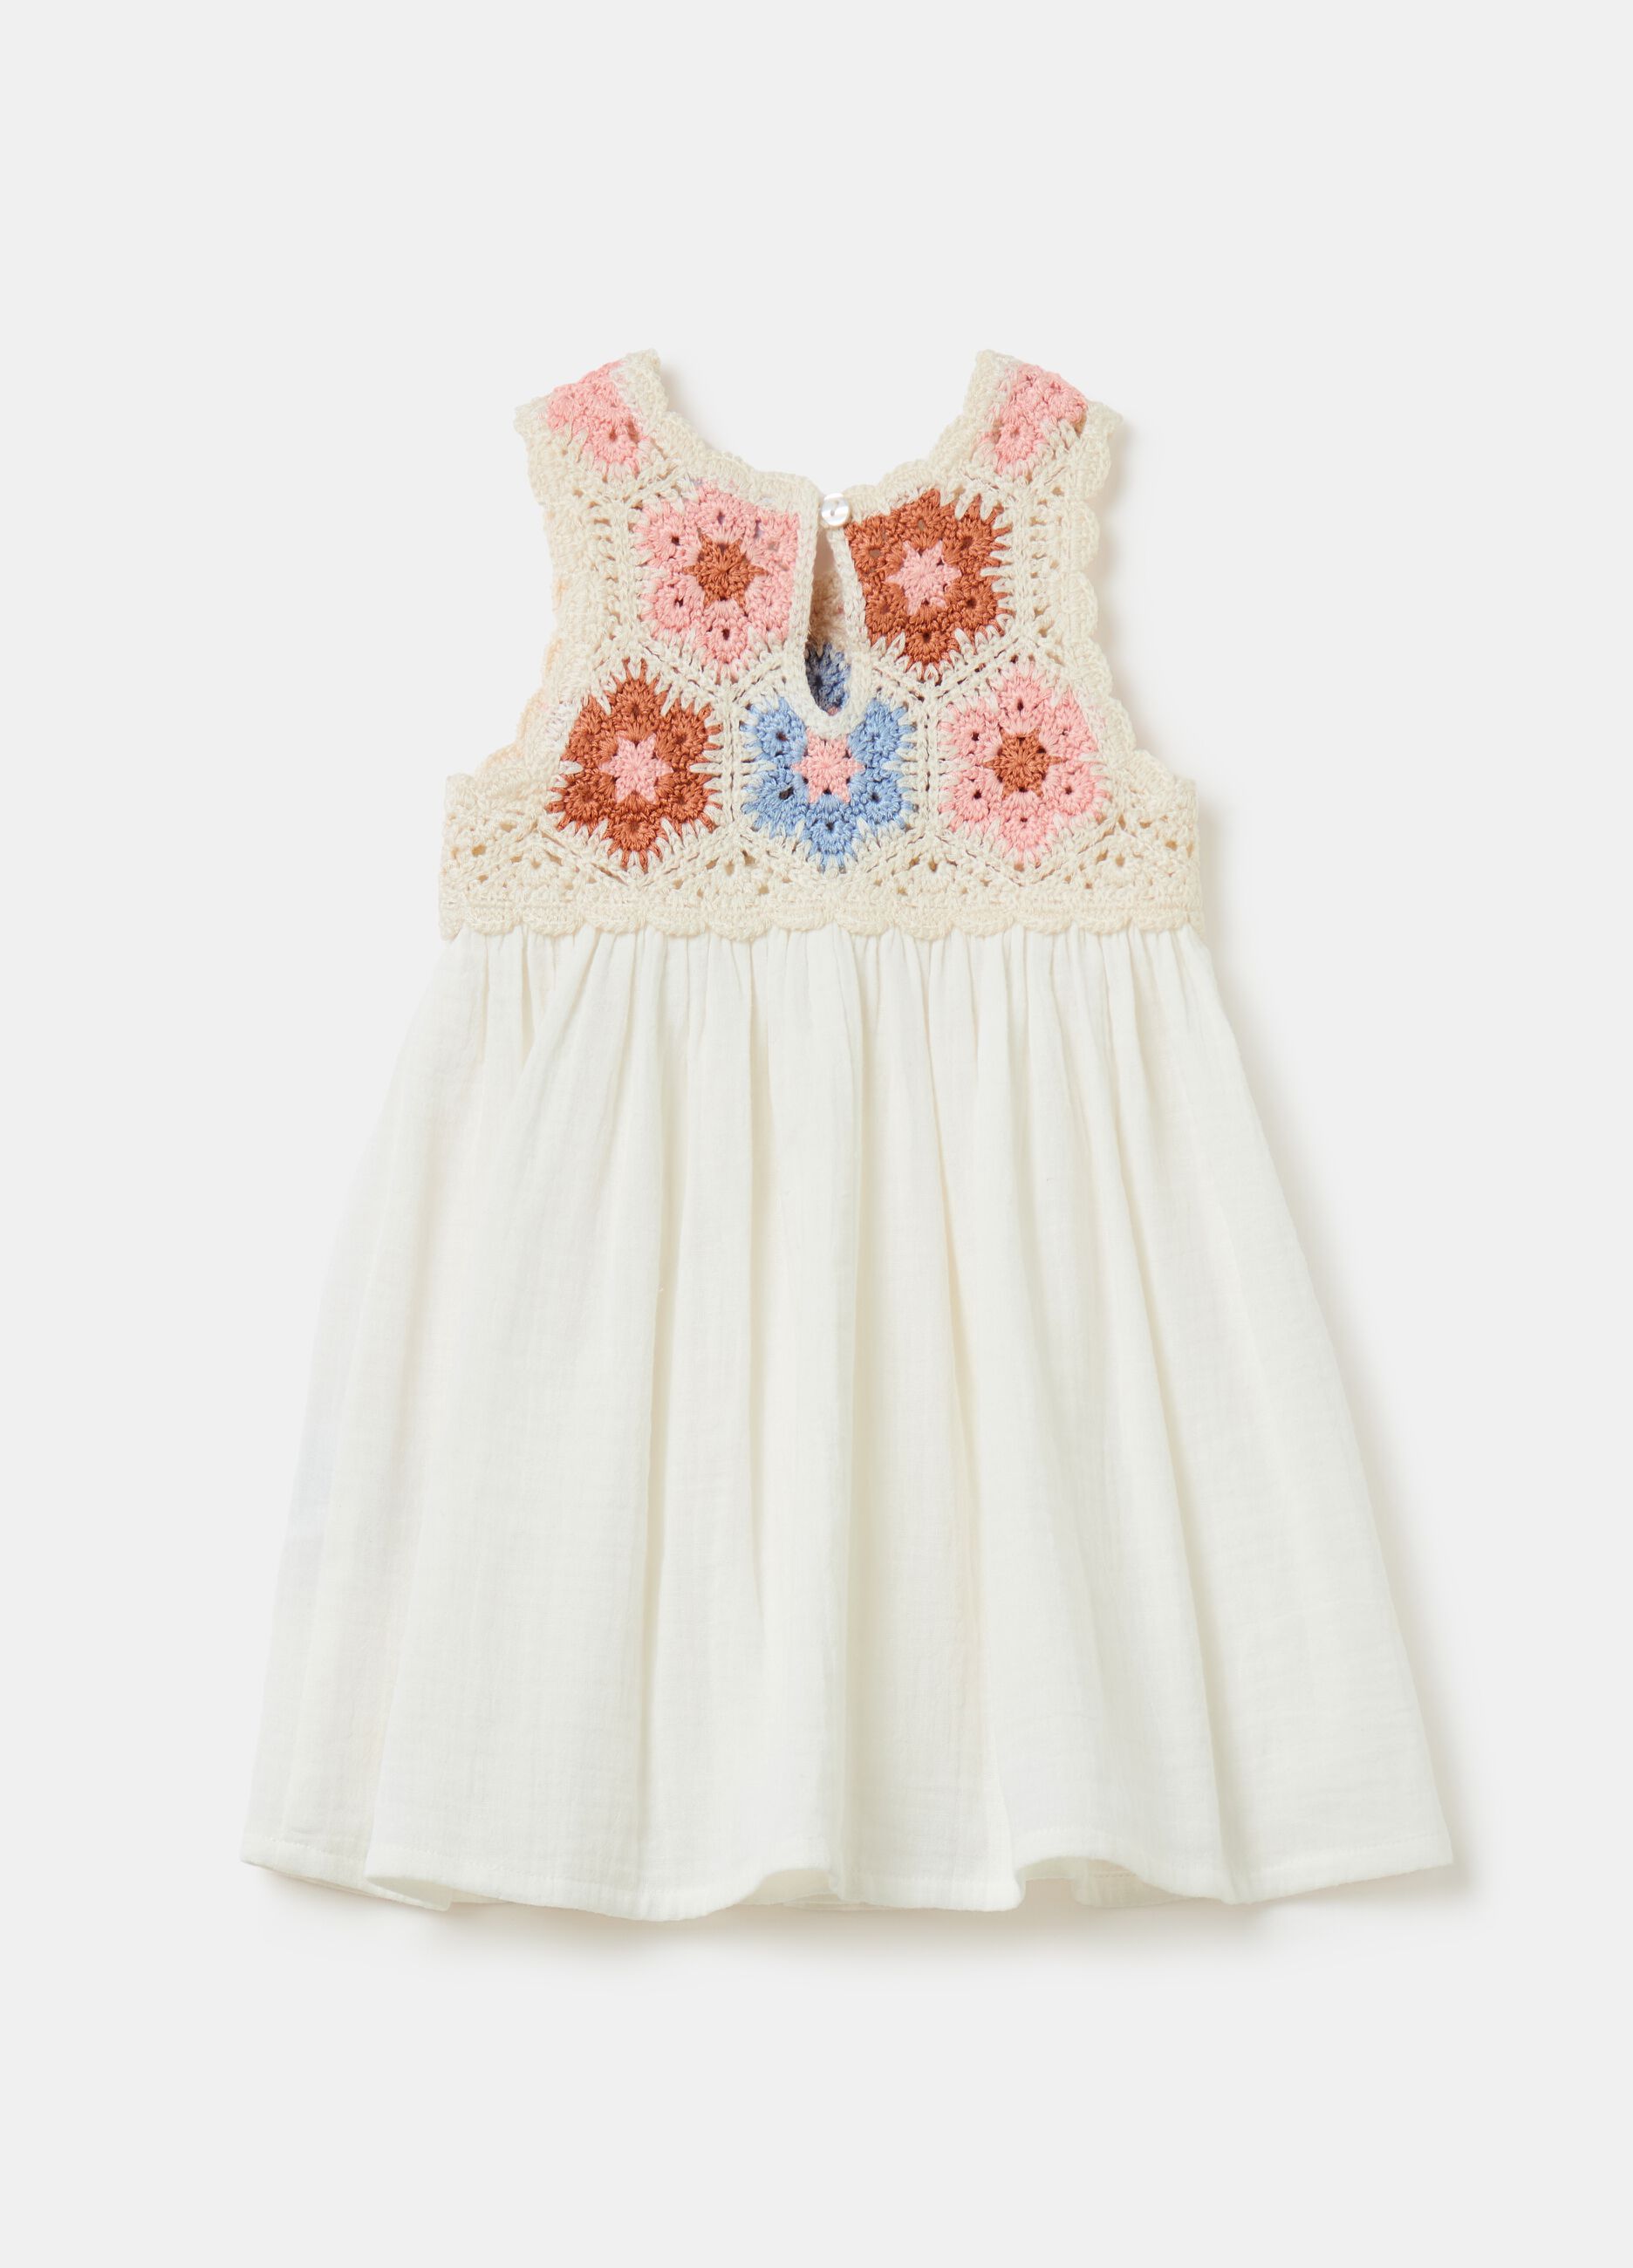 Dress with crochet design